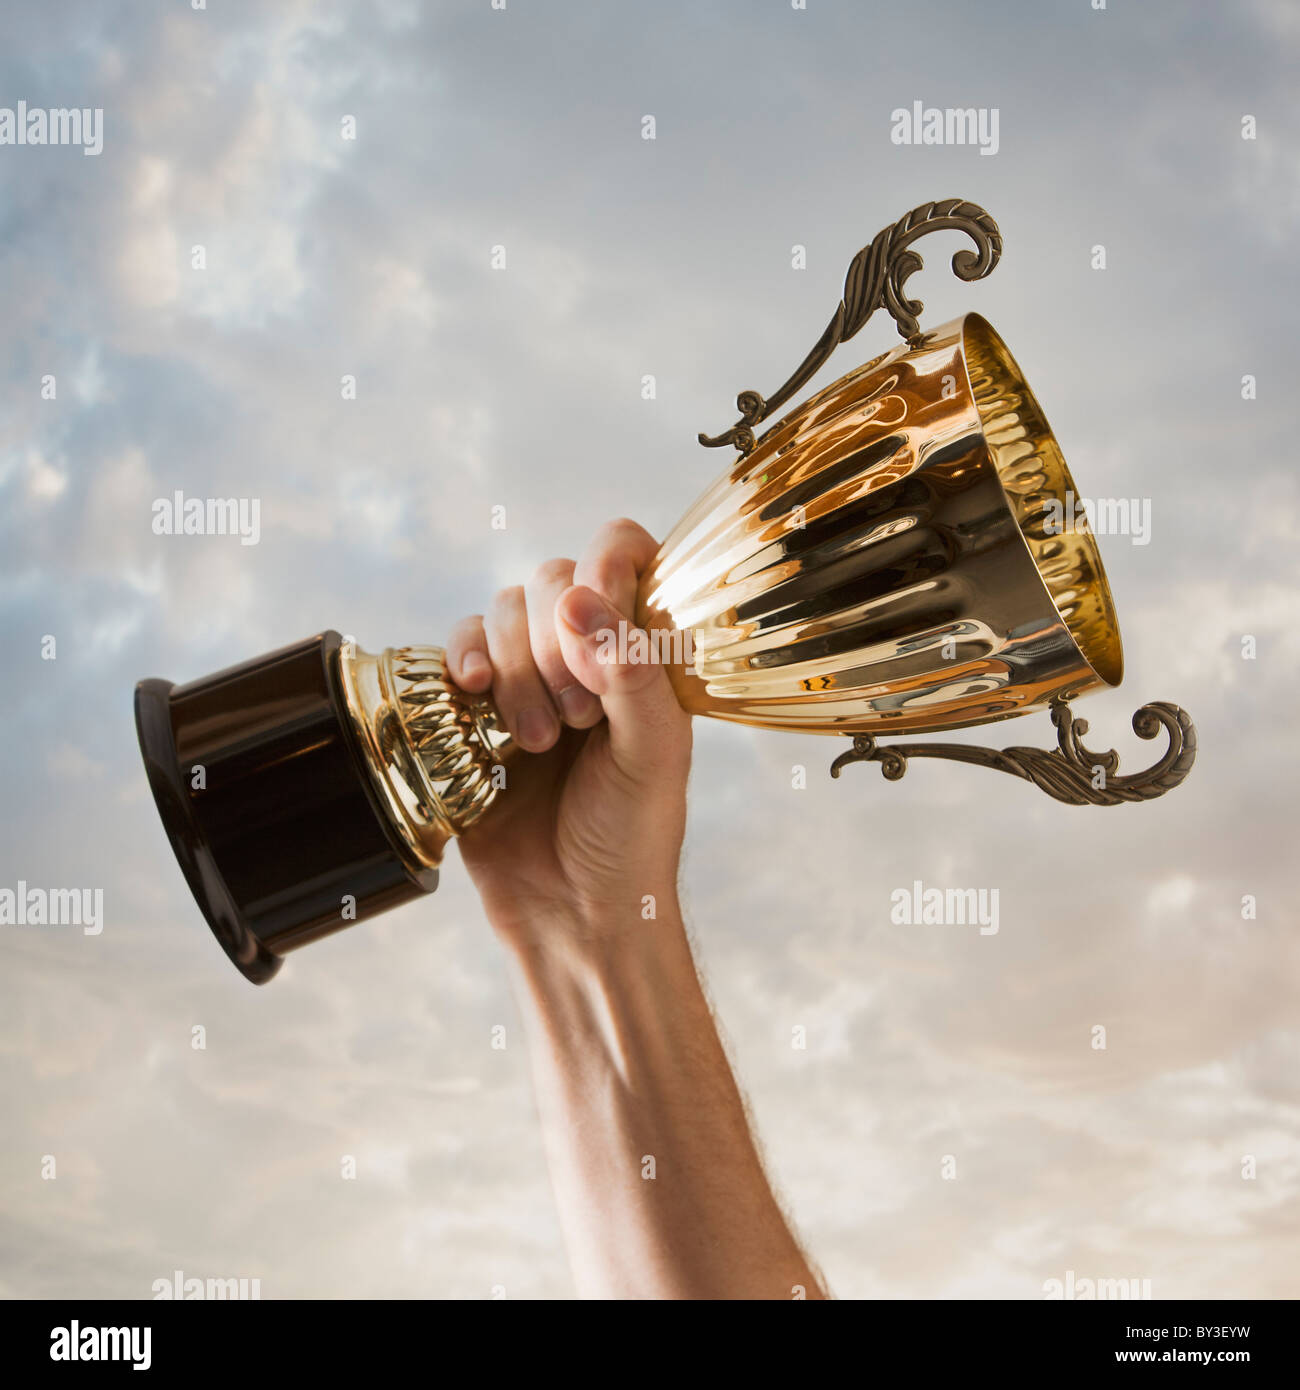 Hand holding trophy against sky Banque D'Images